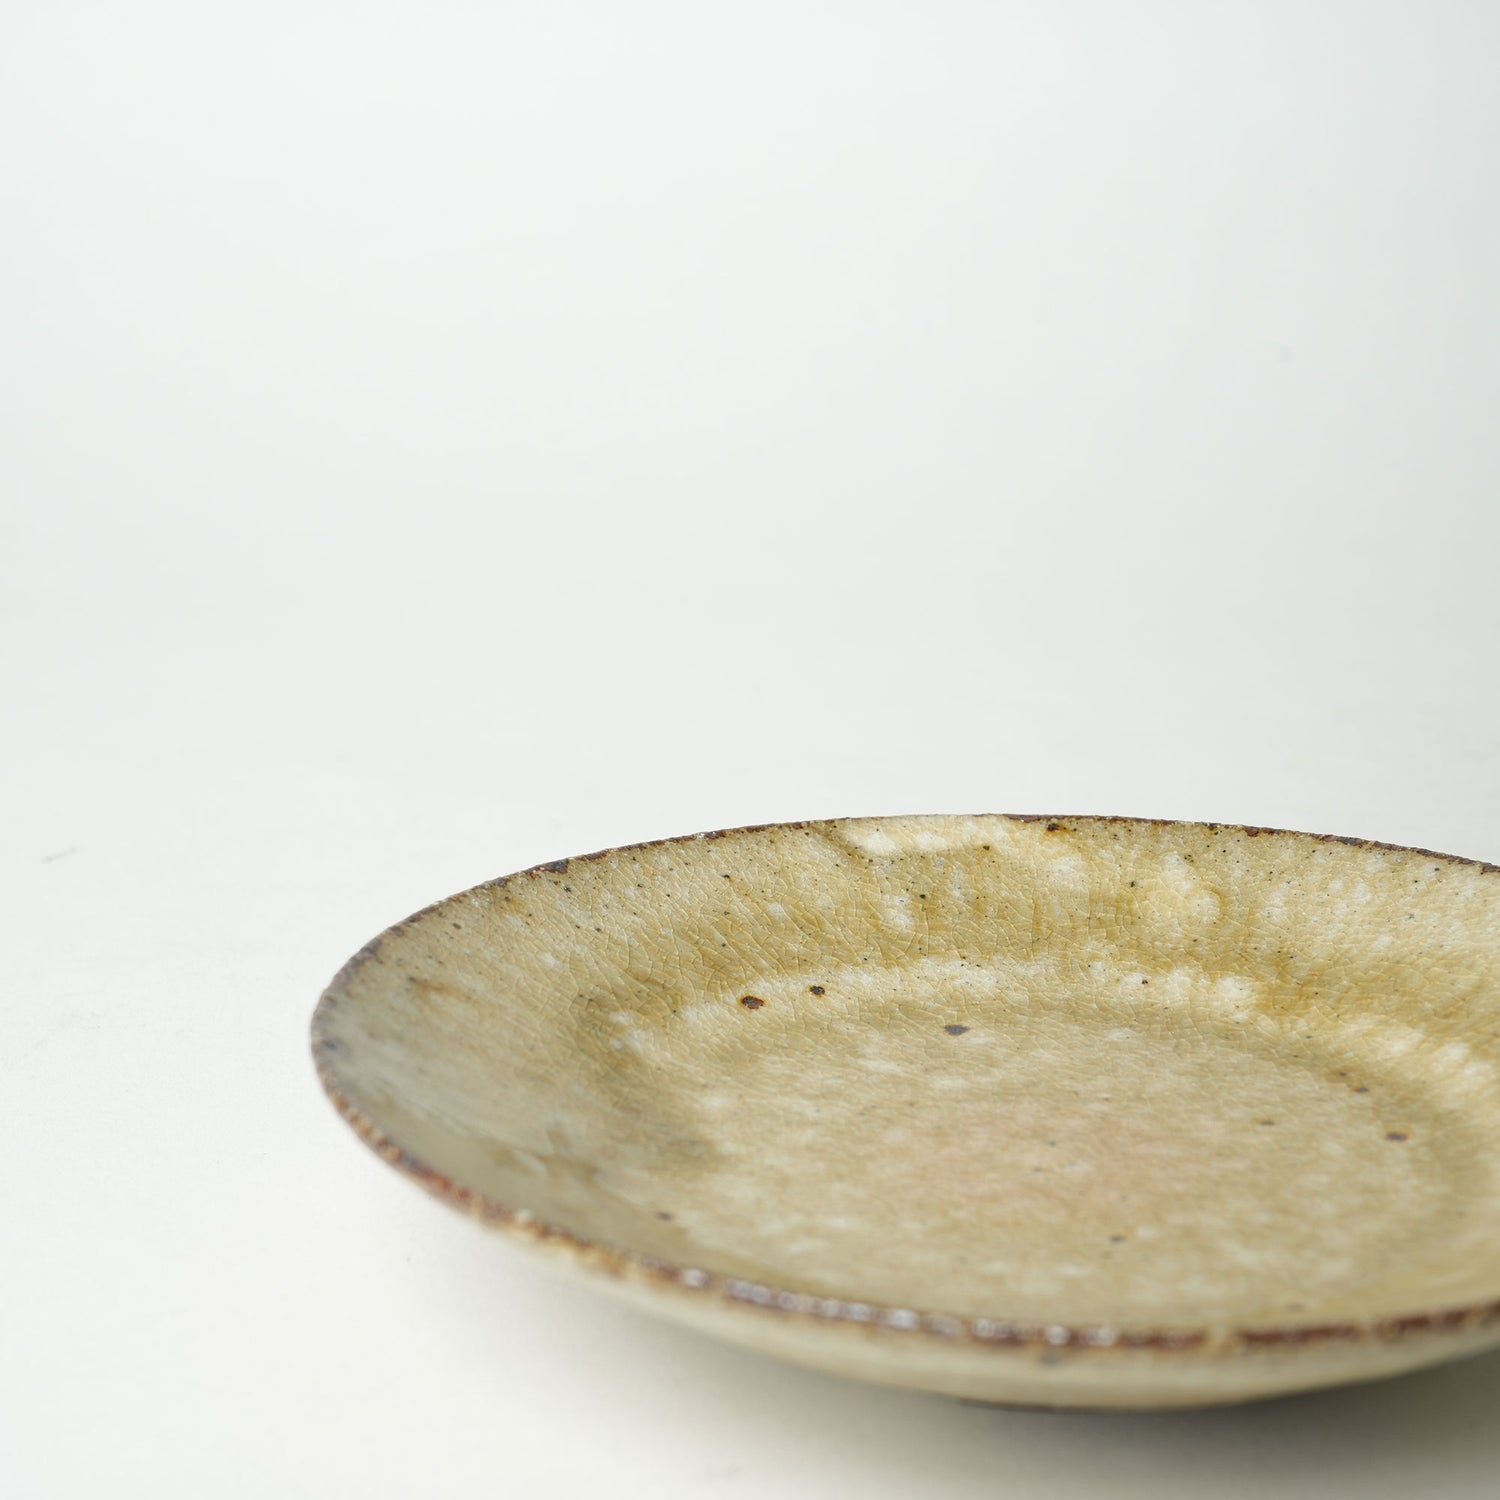 Shinogo Umano Japanese pottery